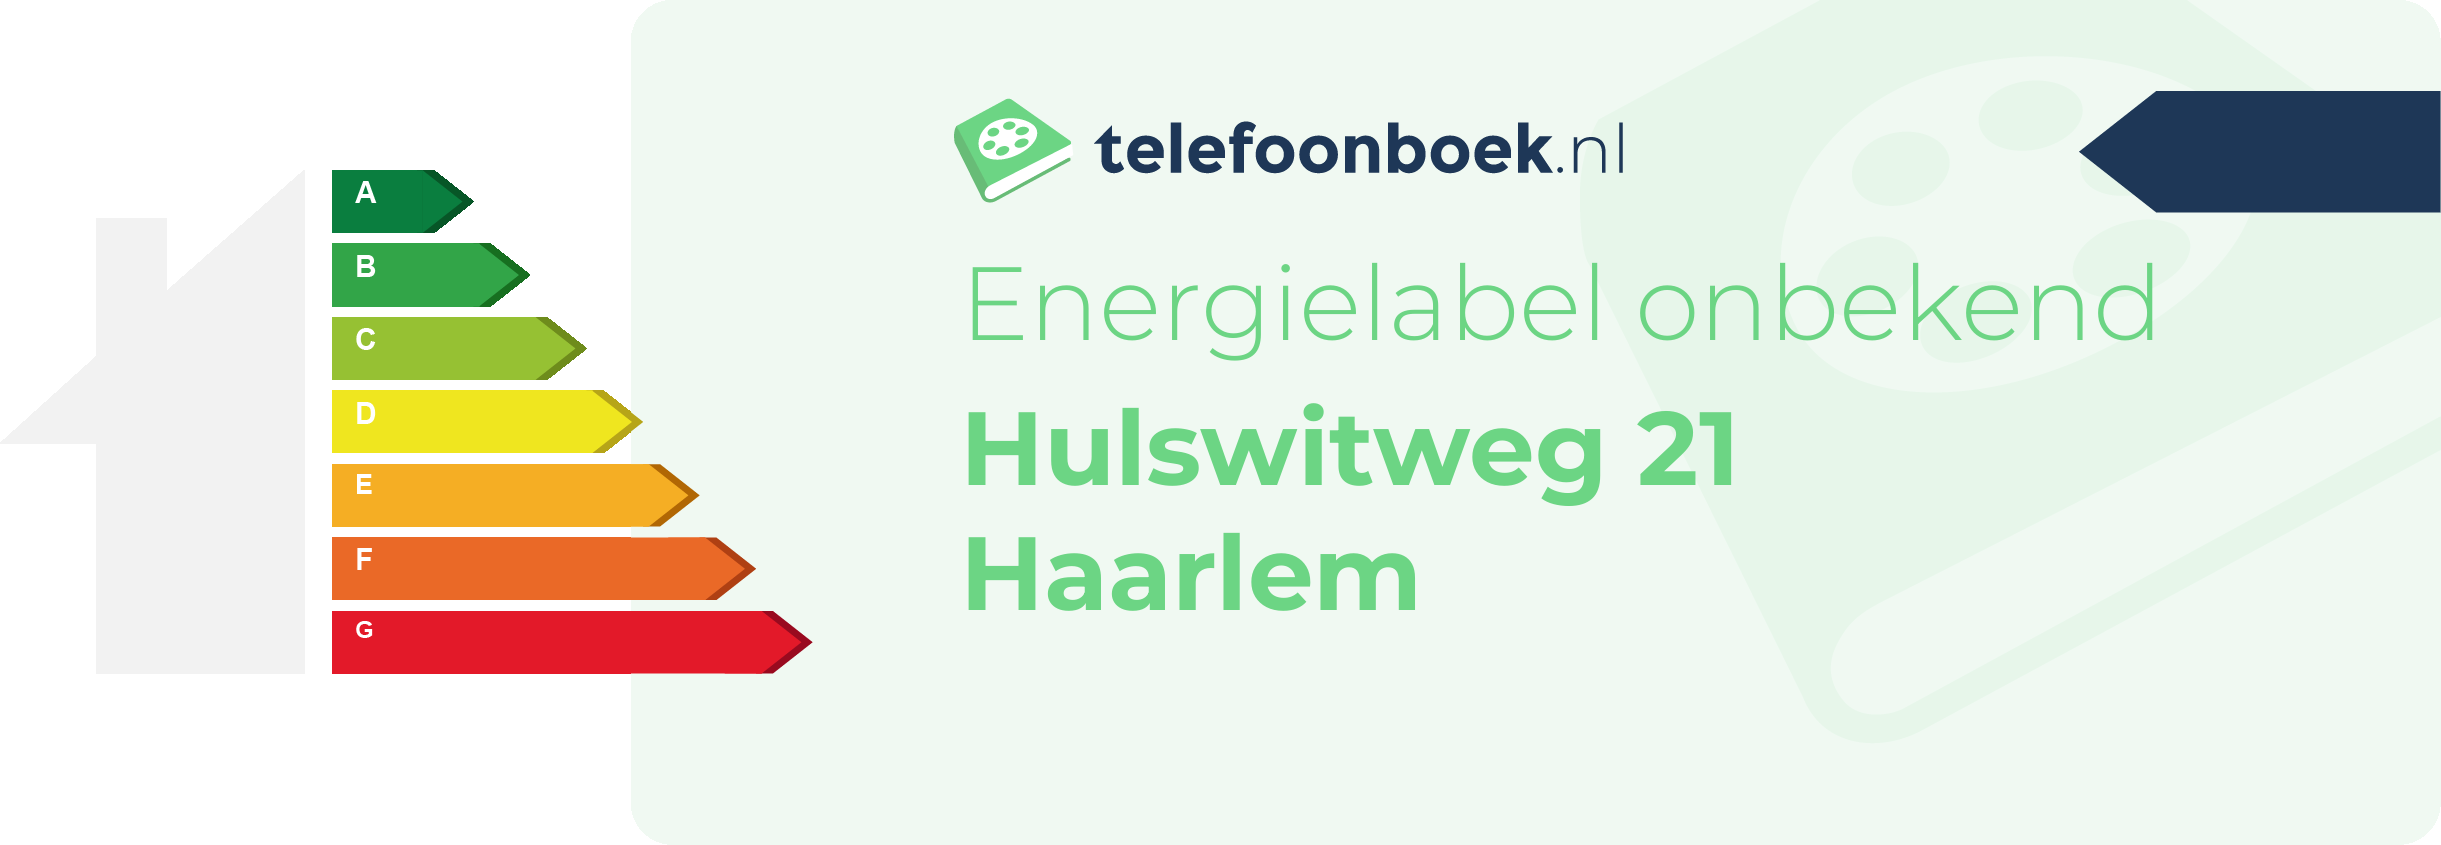 Energielabel Hulswitweg 21 Haarlem